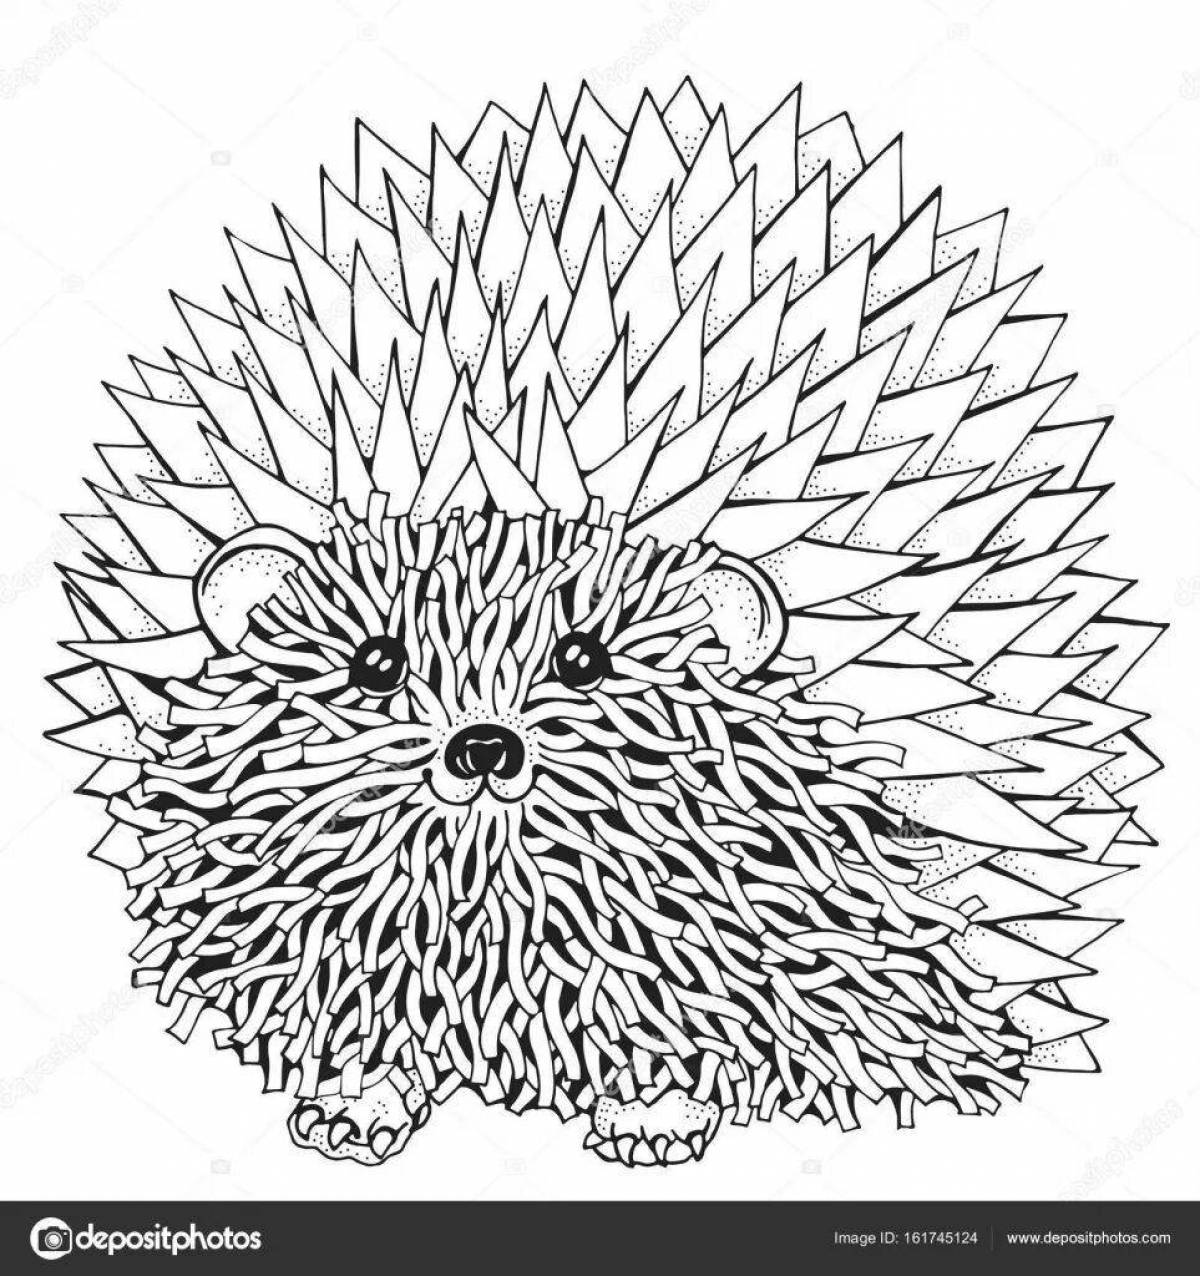 Coloring radiant anti-stress hedgehog